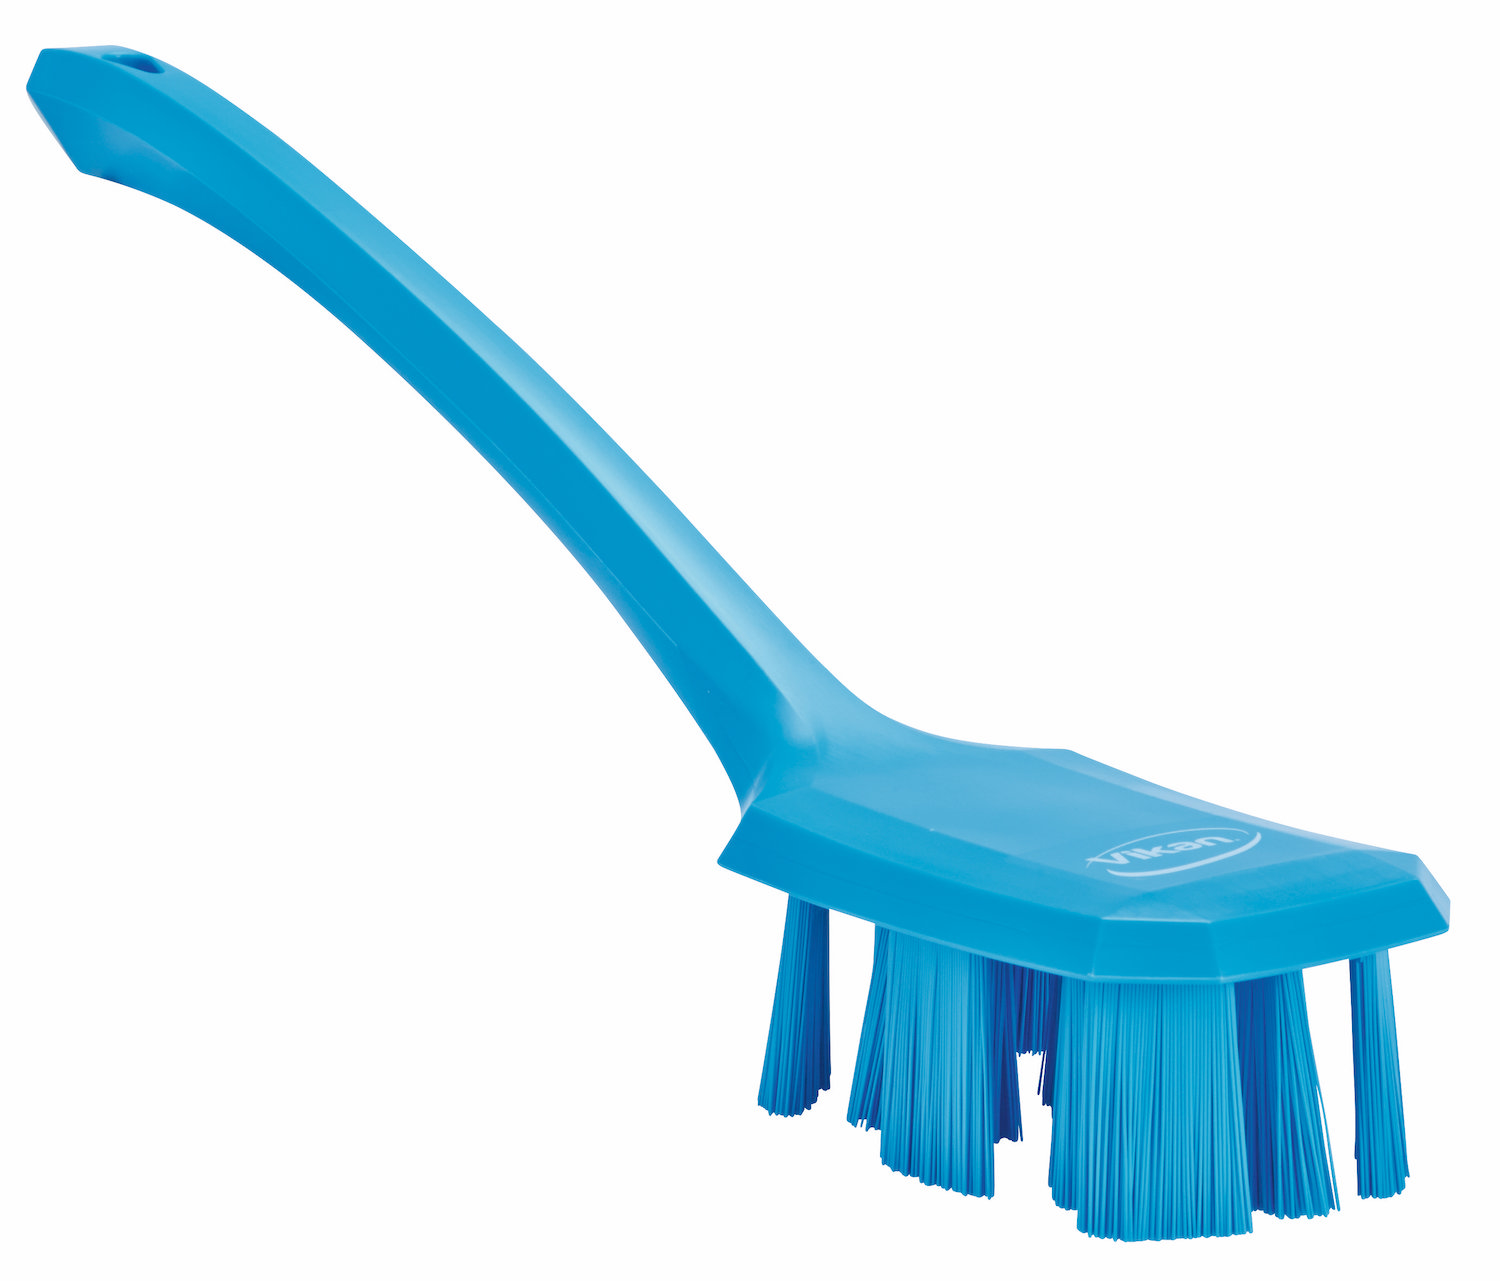 UST Hand Brush w/long Handle, 395 mm,
Hard, Blue